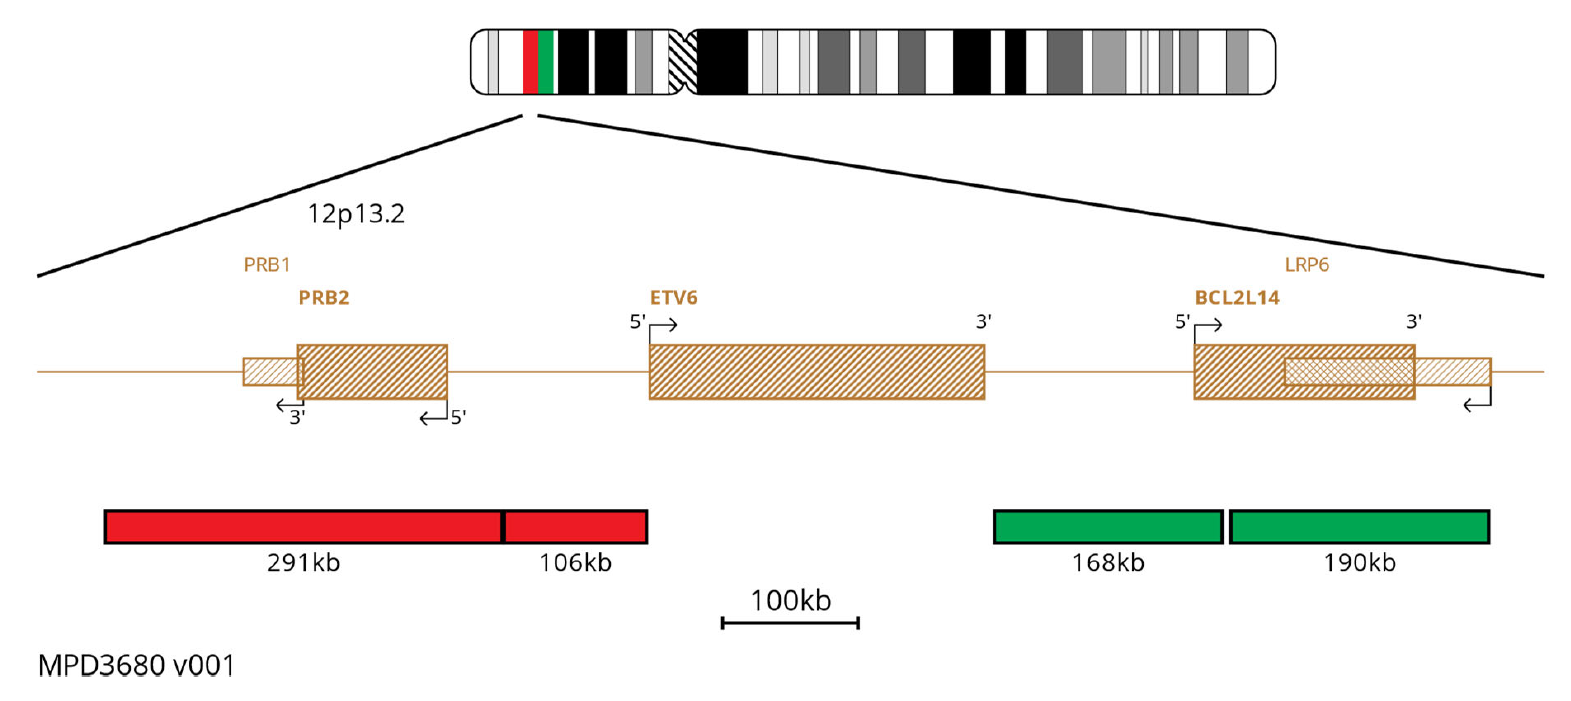 MPD3680 ETV6 Breakapart FISH Probe Chromosome Map